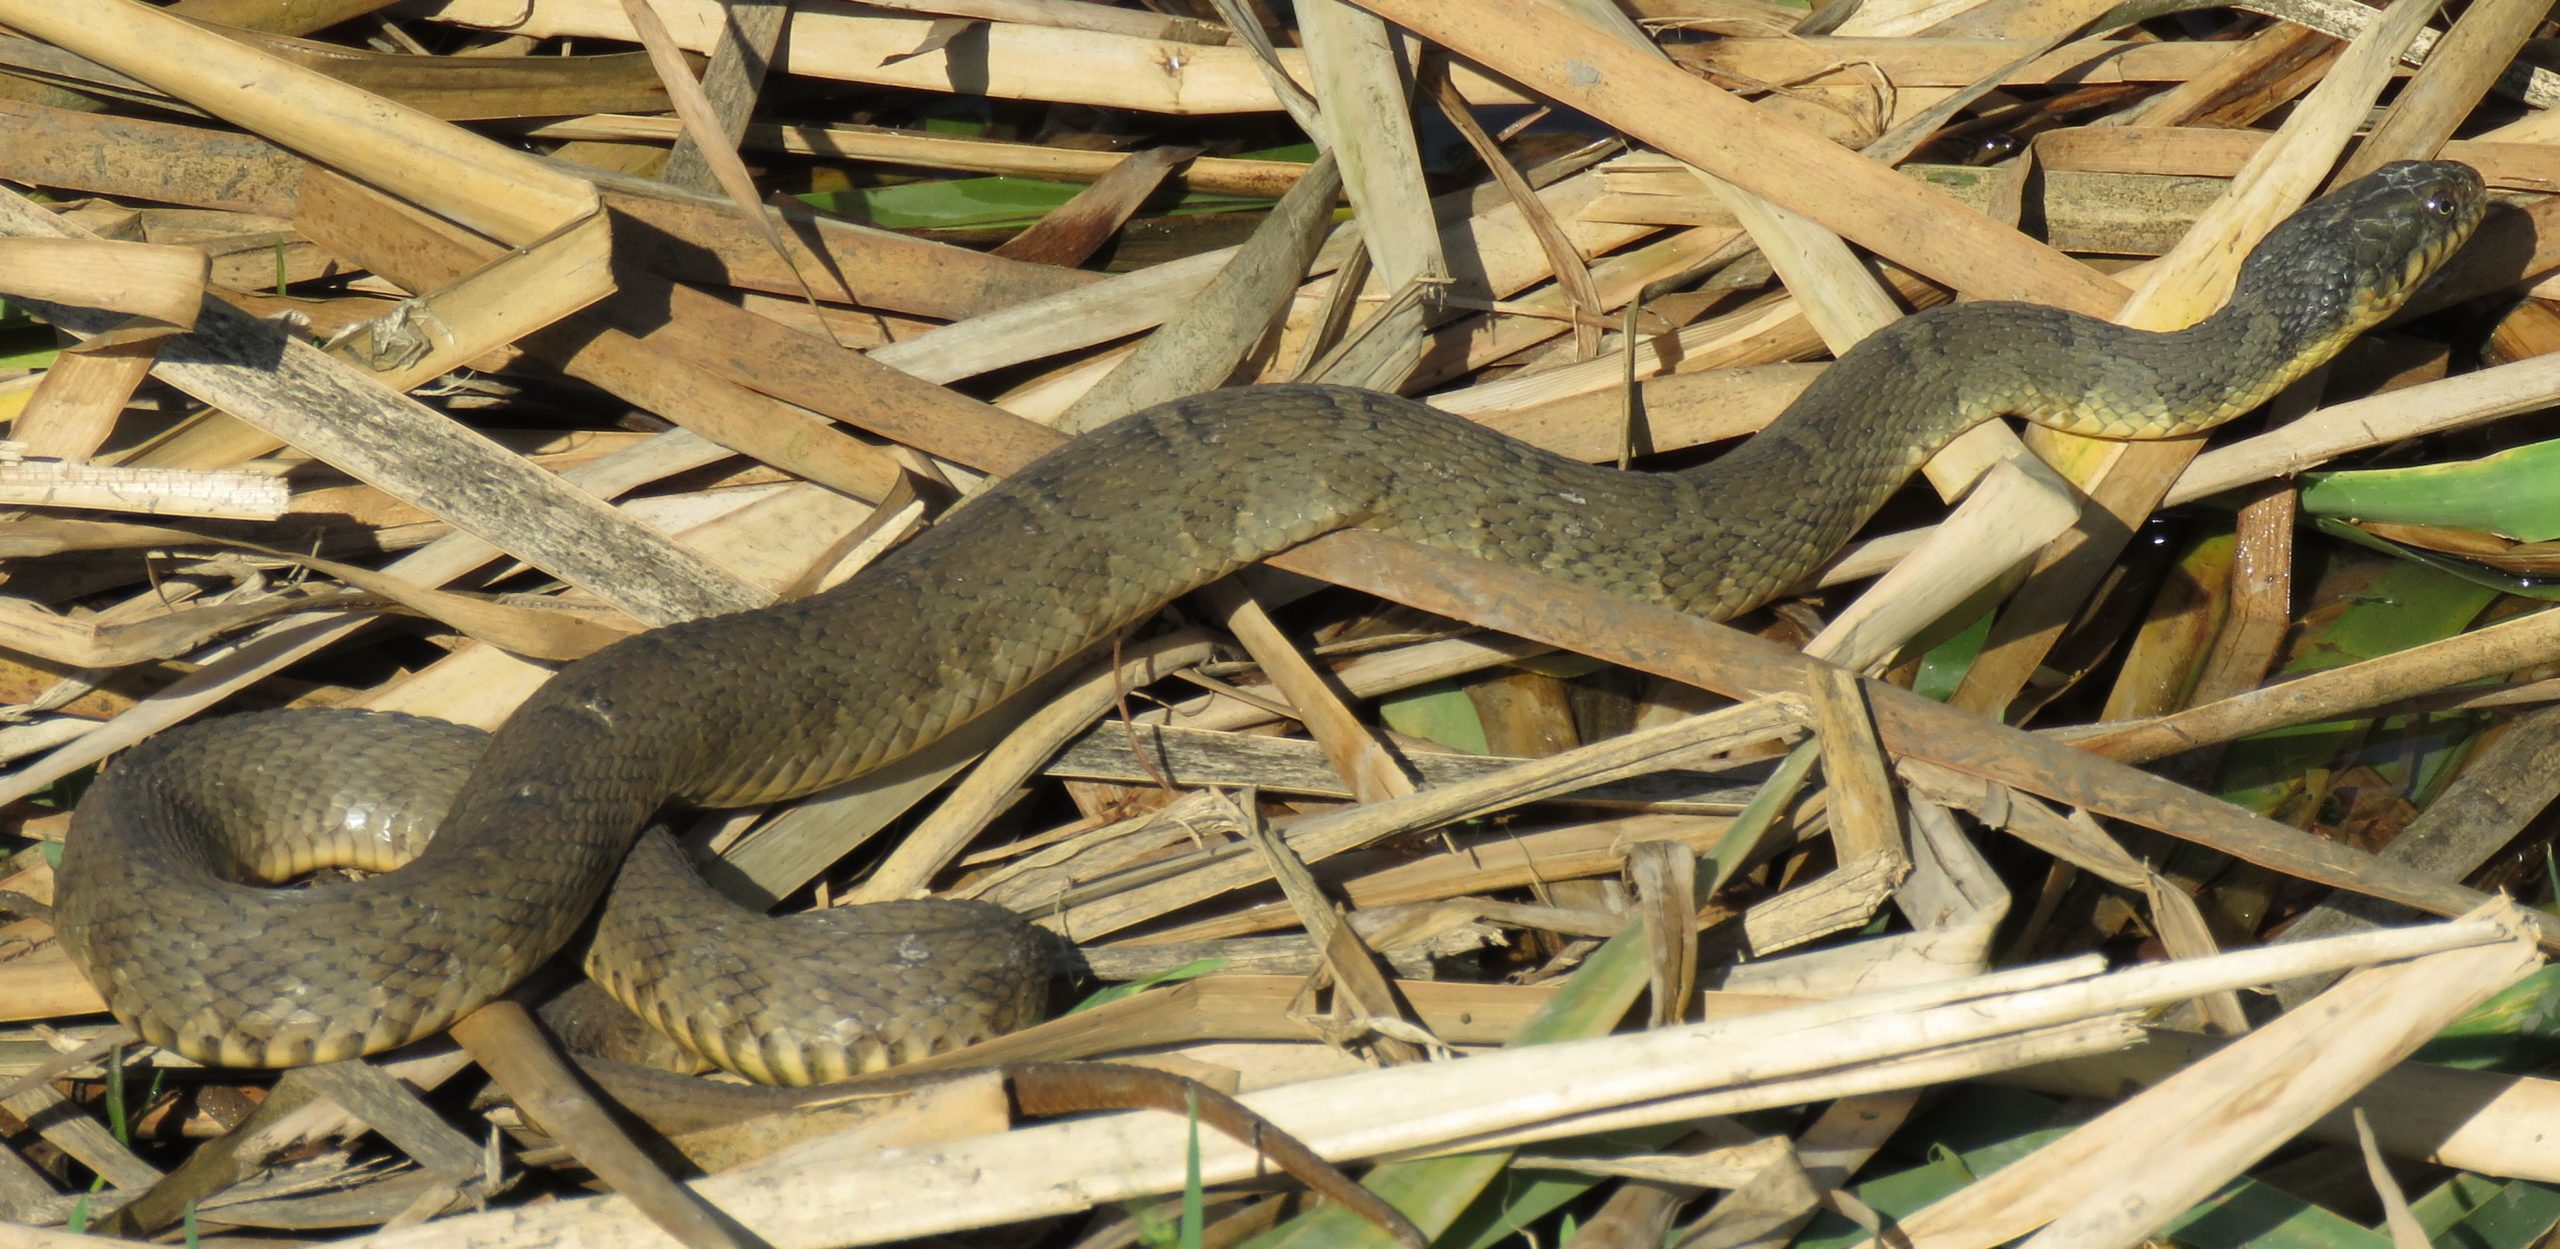 central texas snake identification